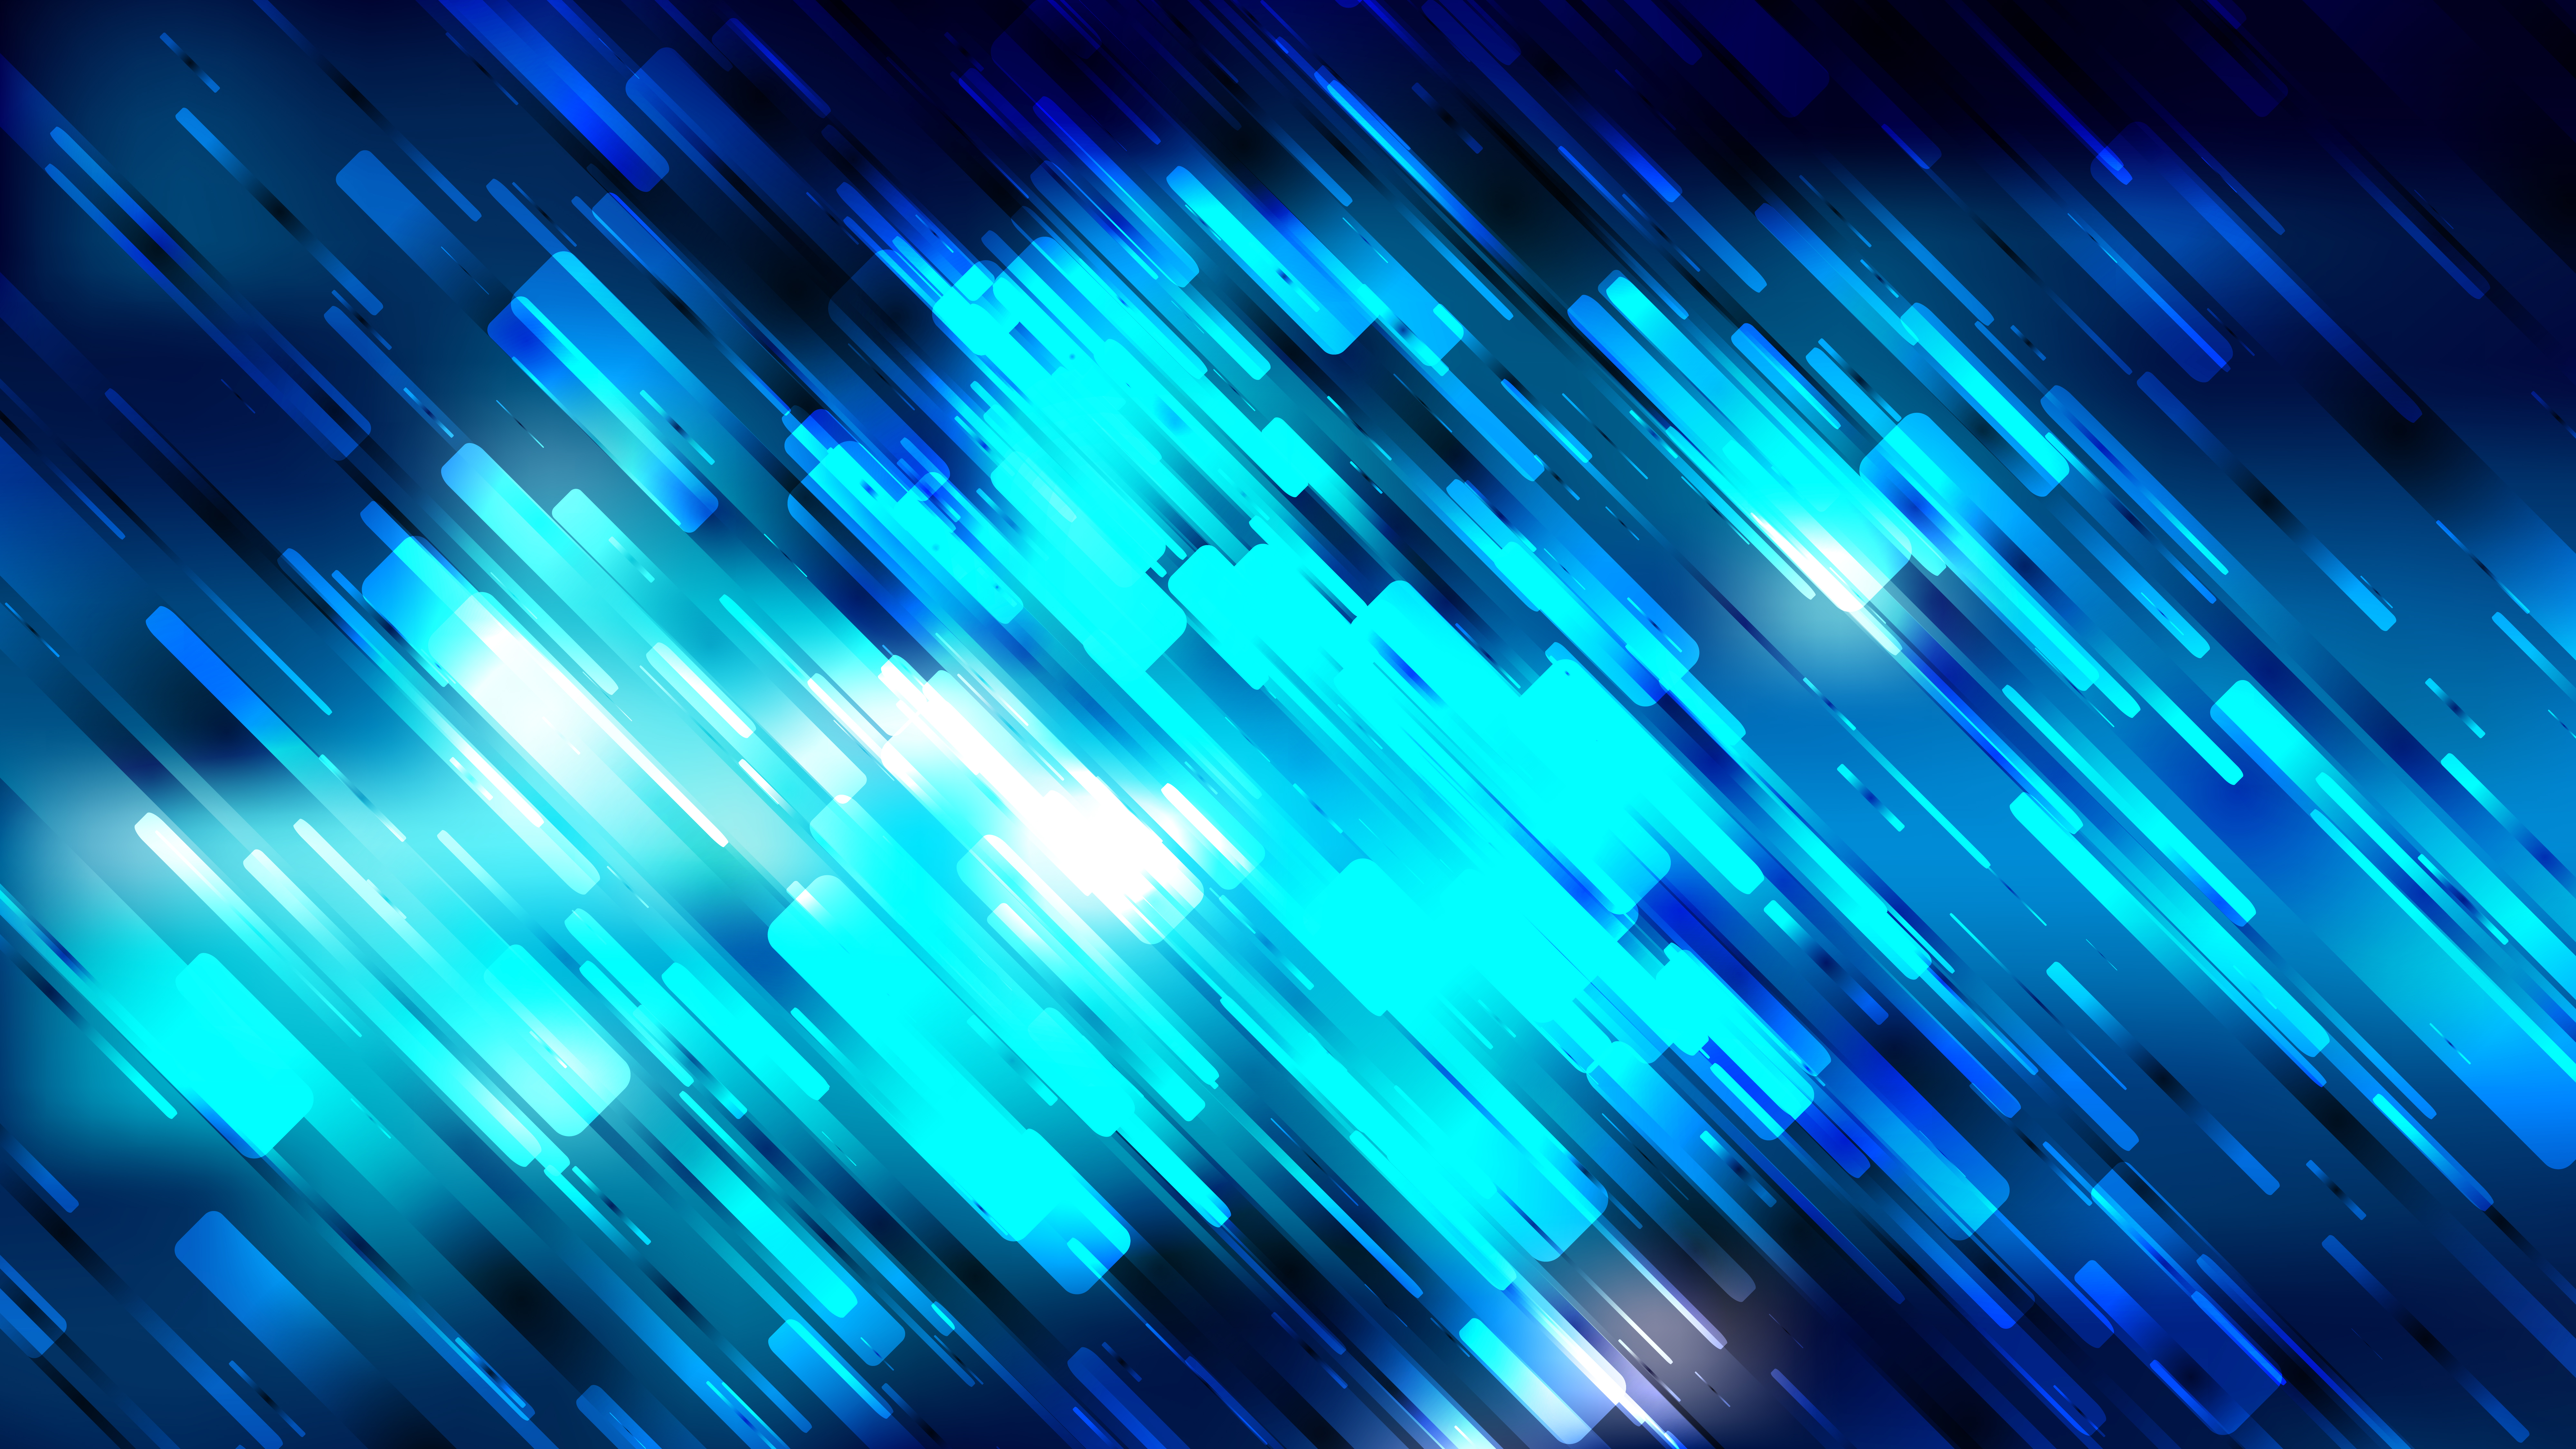 Black And Blue Random Diagonal Lines Background Image